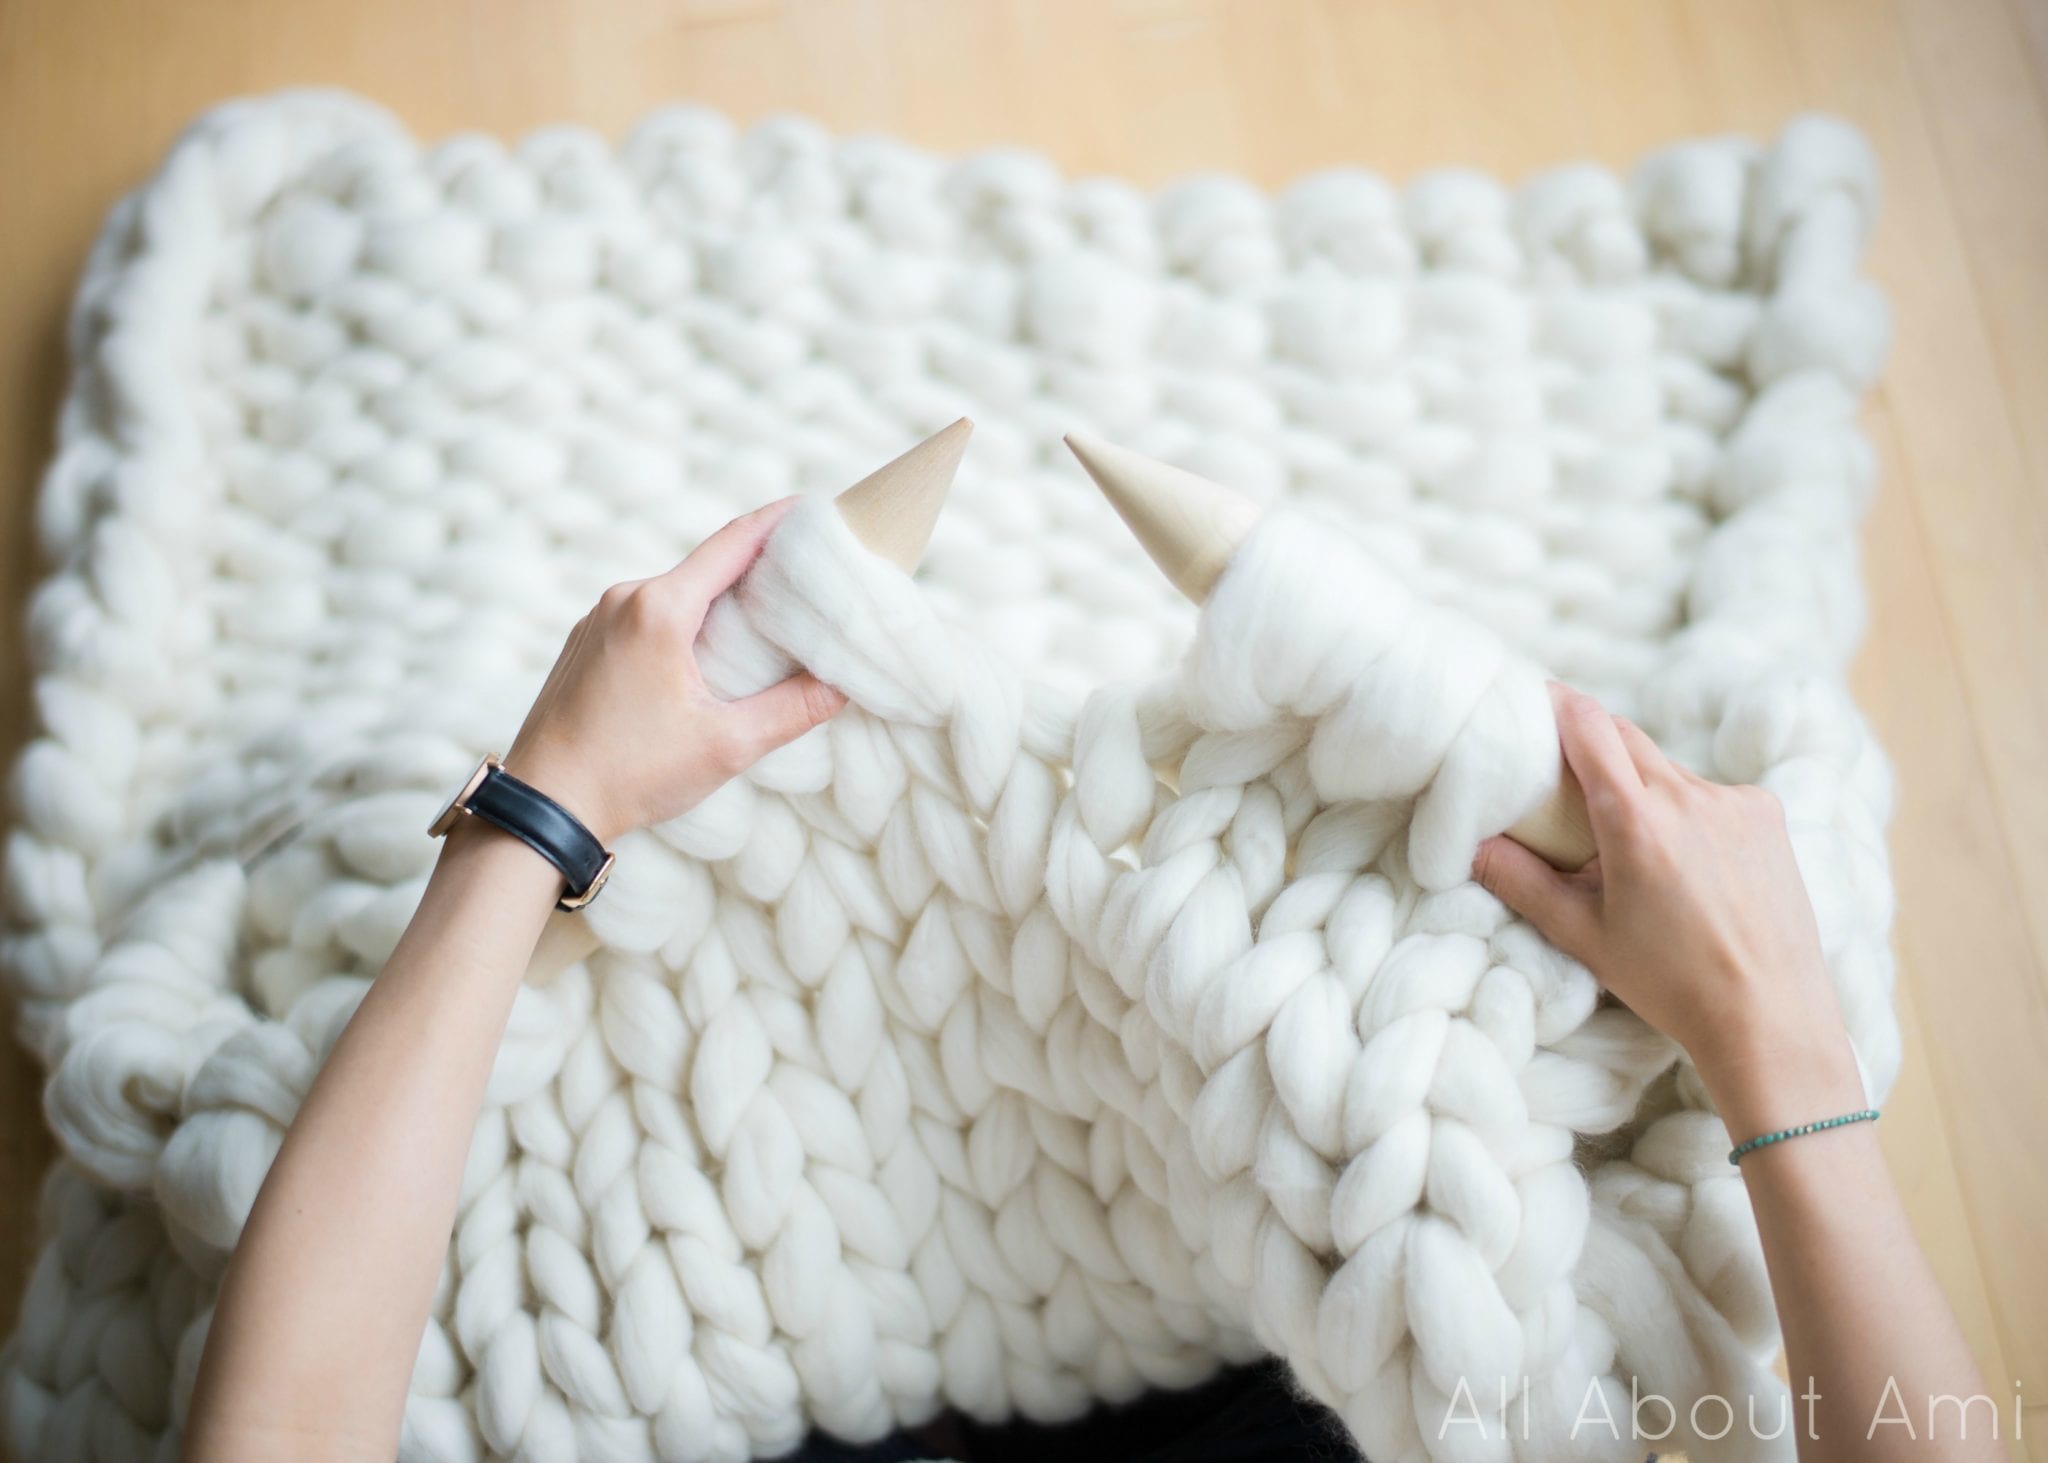 Thick Chunky Yarn Chunky Wool Yarn Bulky Yarn for Crocheting Arm Knitting Yarn Weight Yarn Knit Yarn for Knitted Blanket Mat Weaving Sweater Light